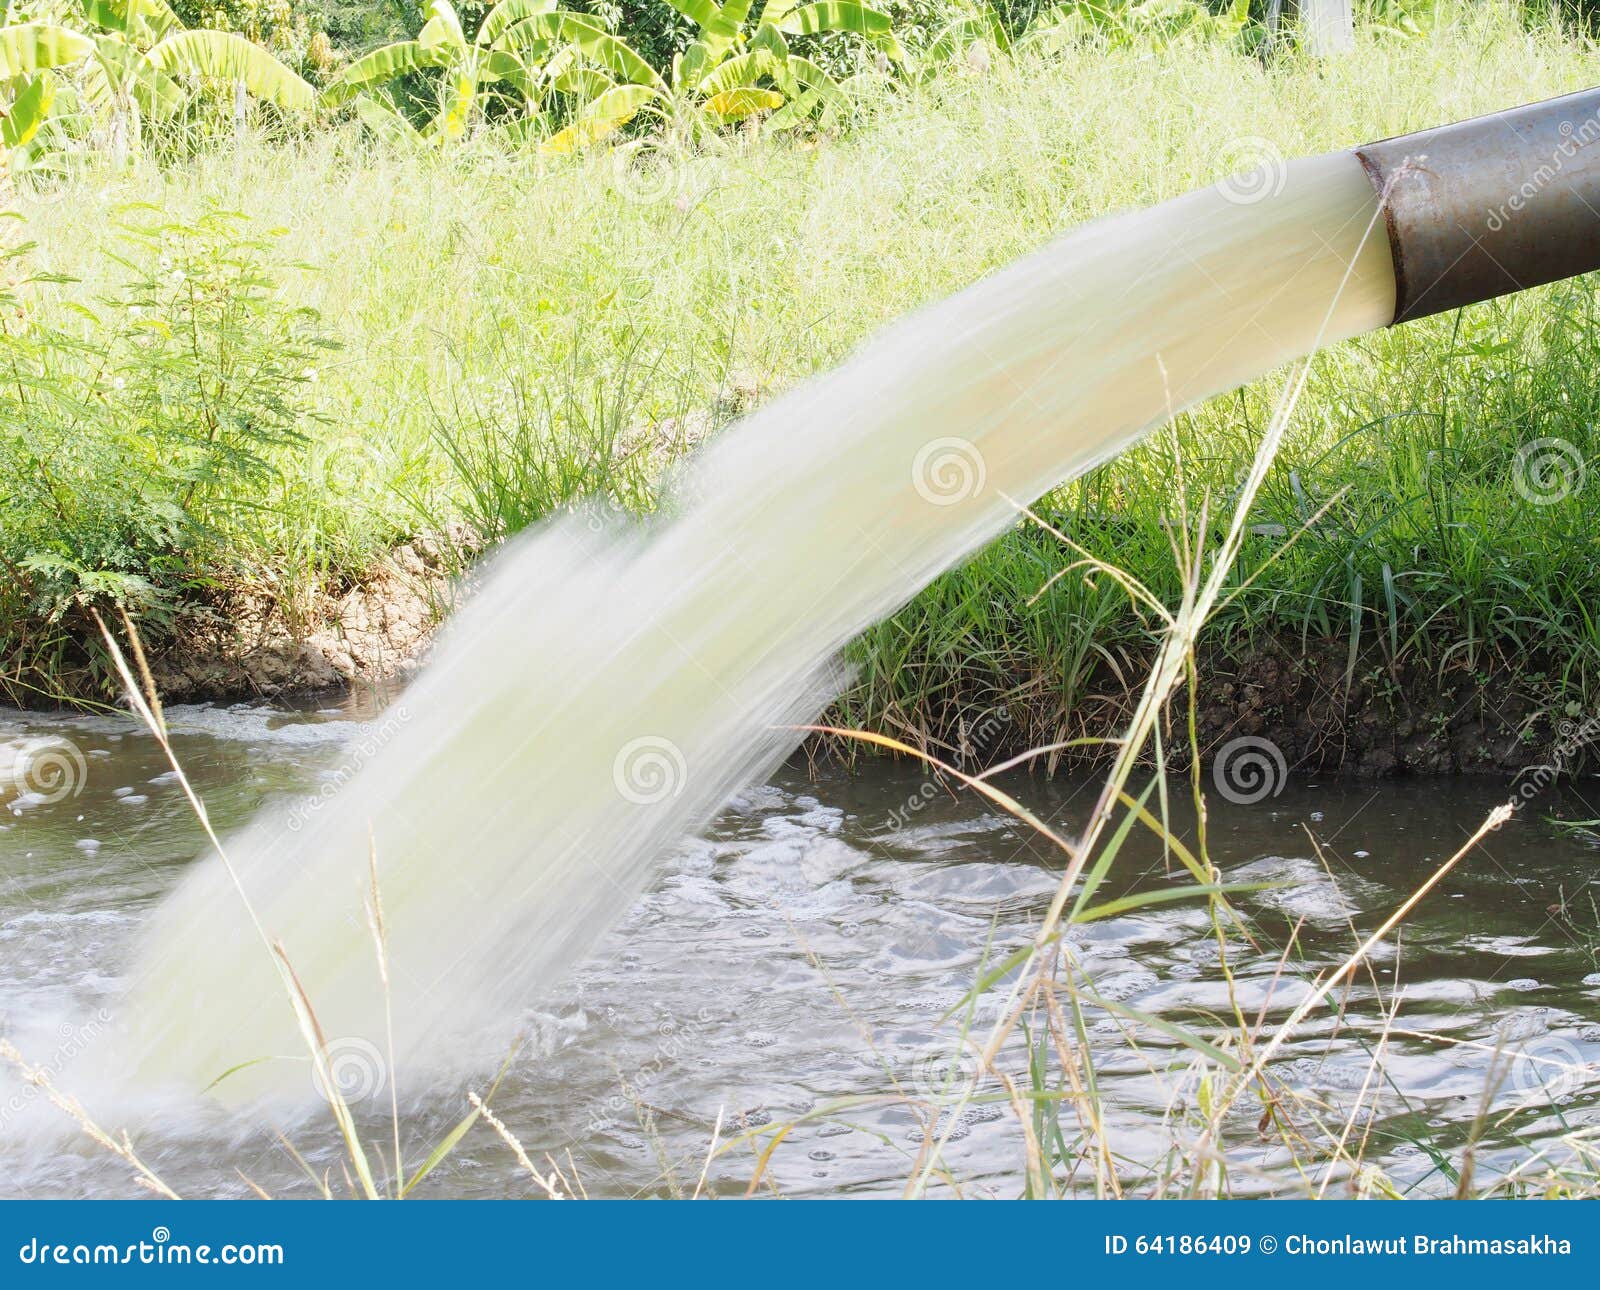 water-flow-stock-photo-image-64186409